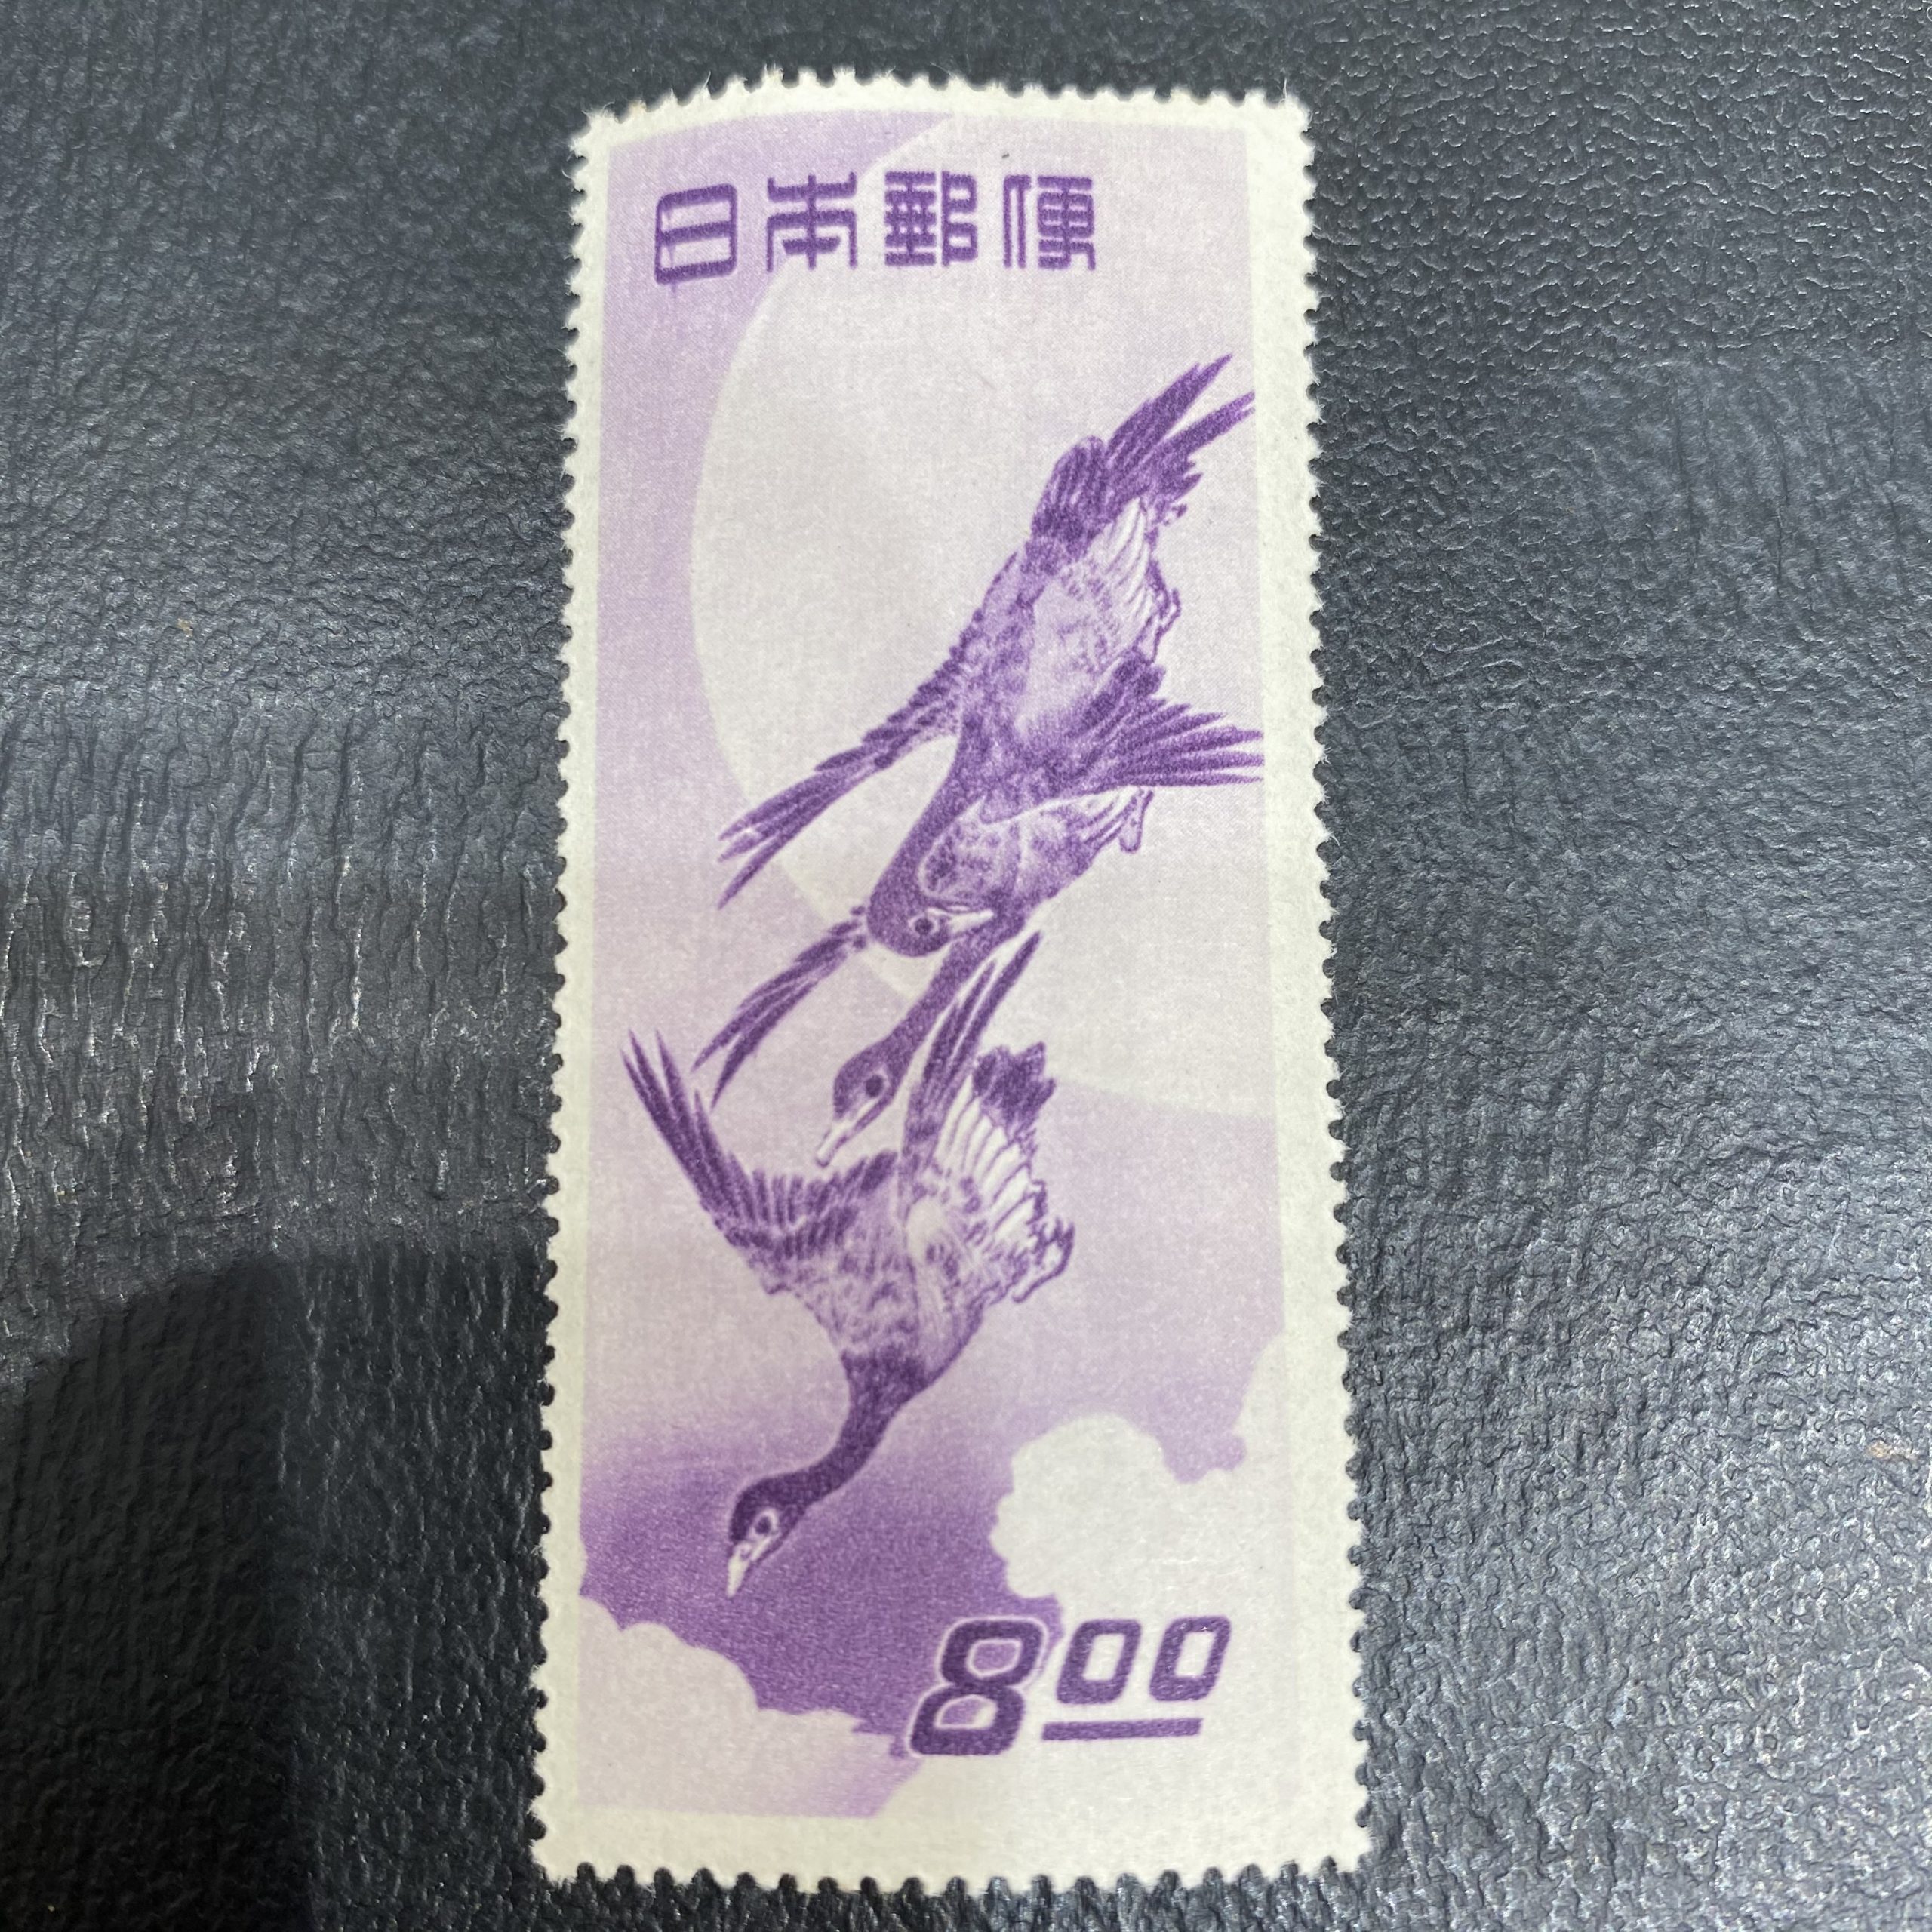 【日本切手】月に雁 8円切手